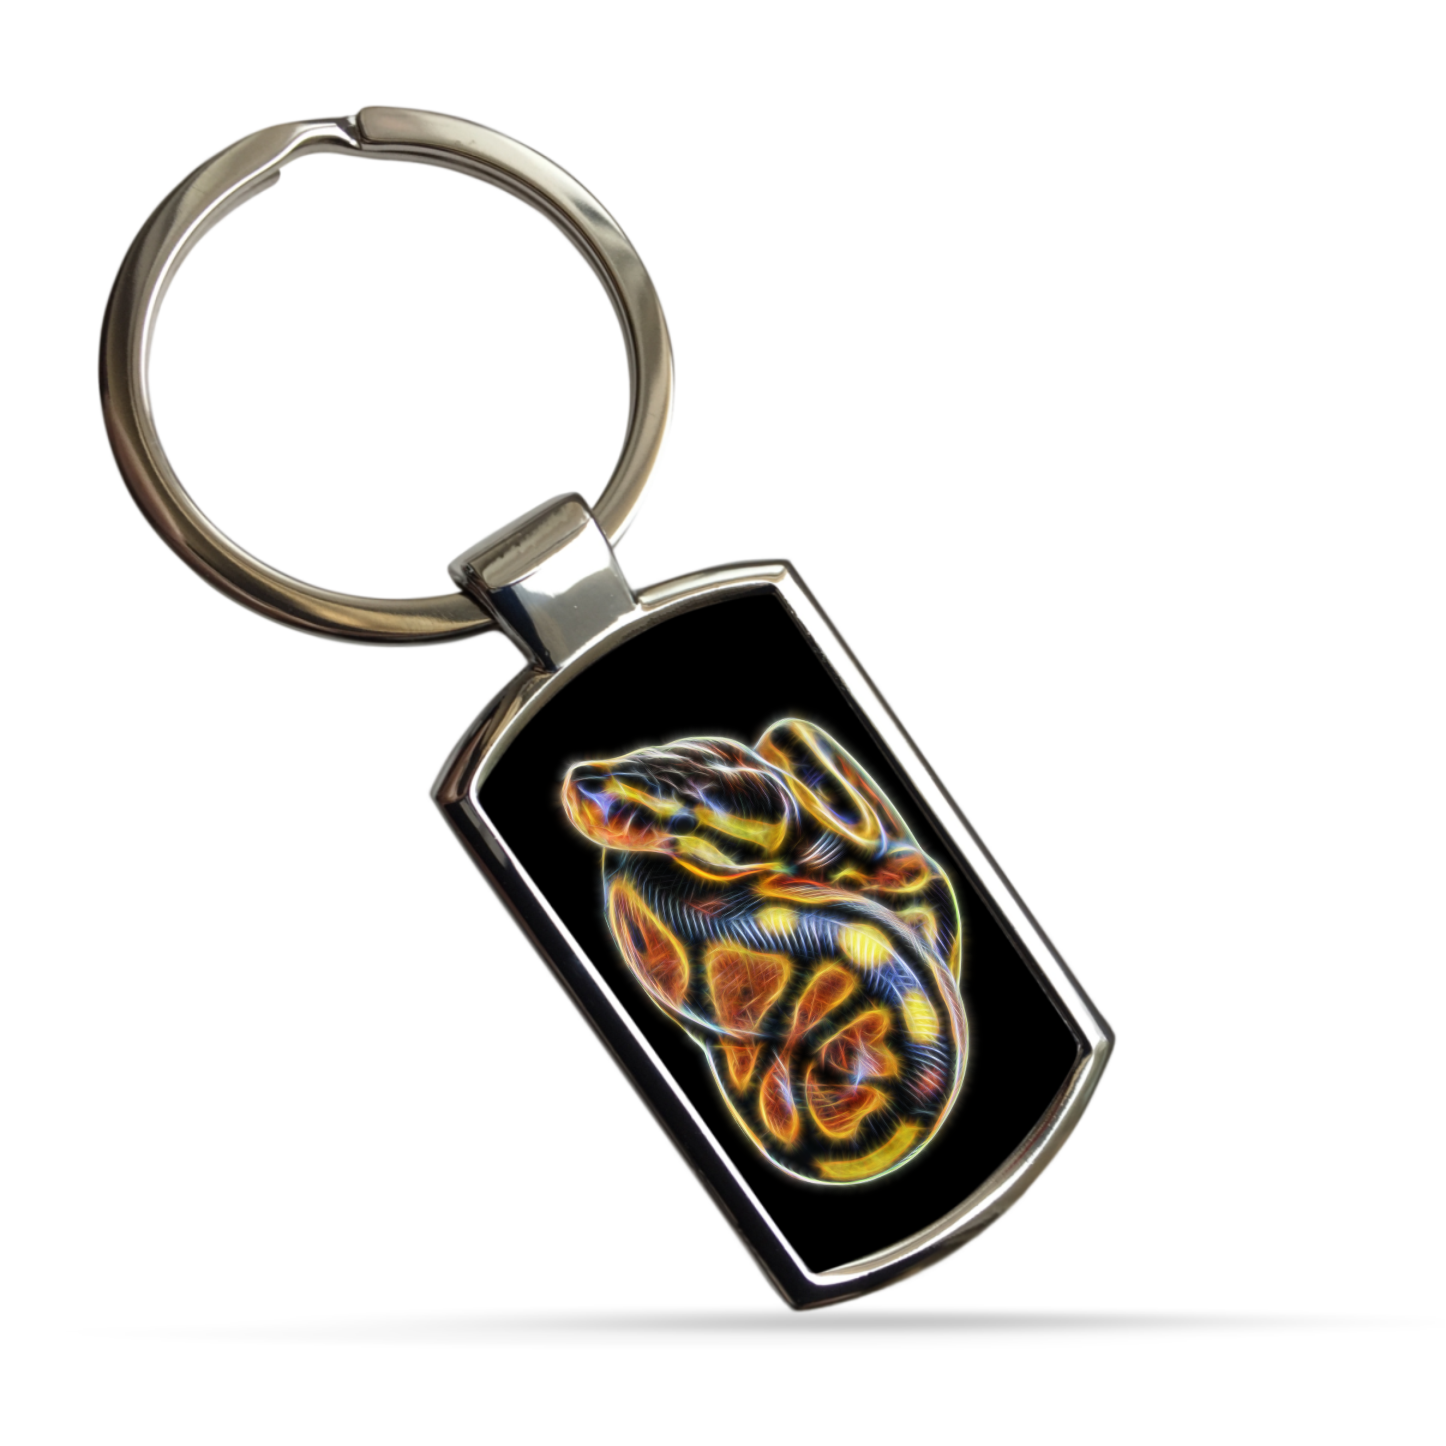 ball python keyring | keychain with fractal art design